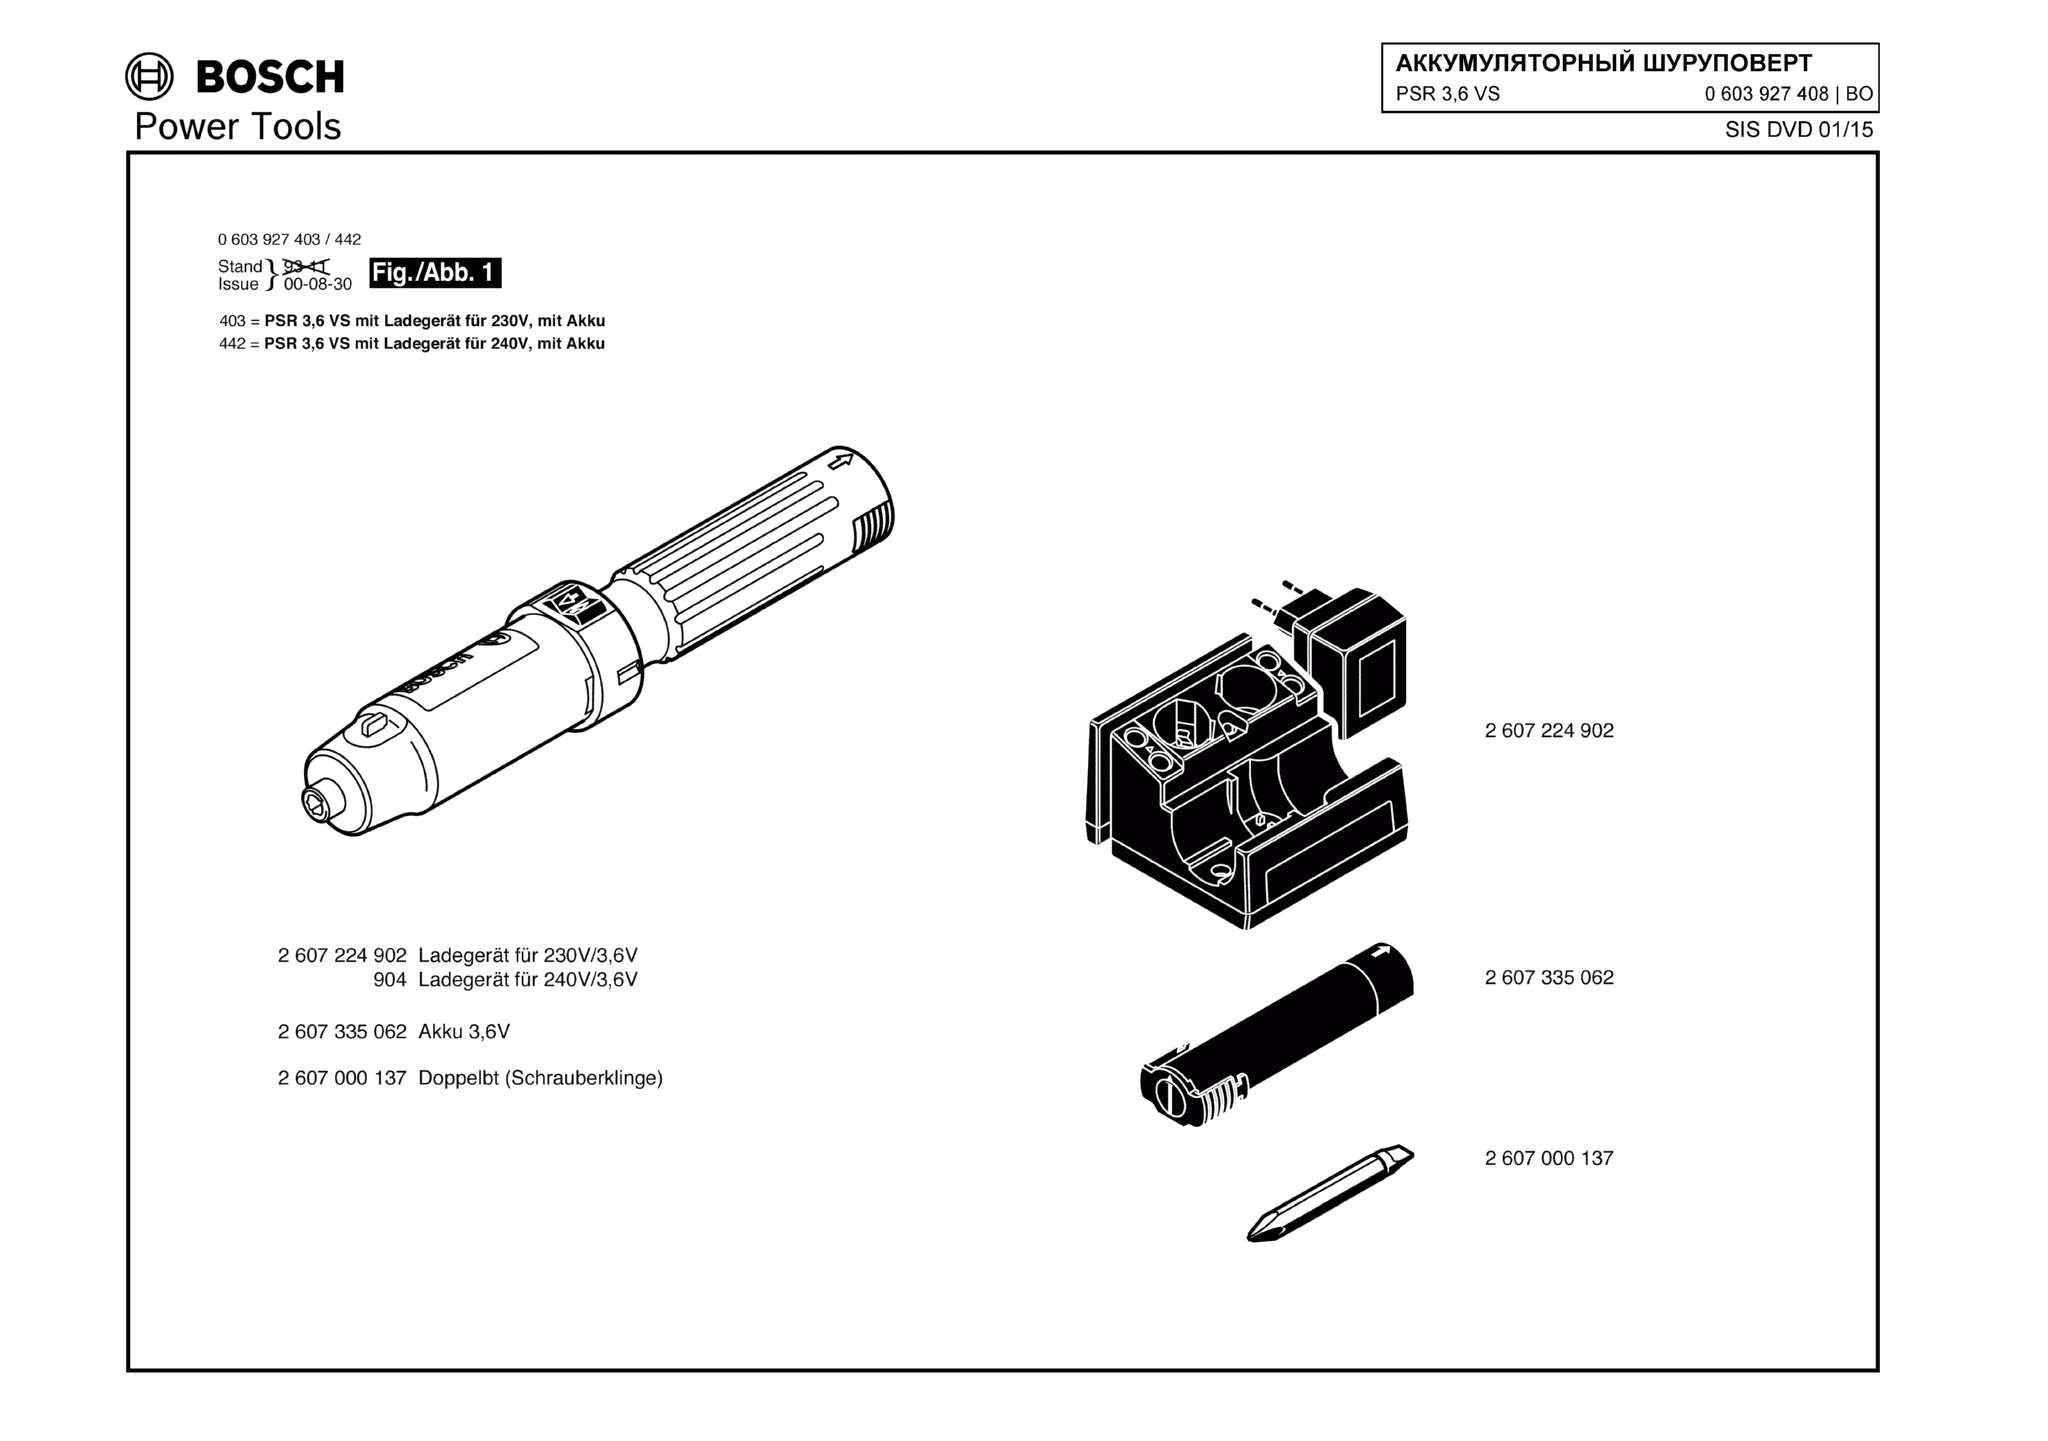 Запчасти, схема и деталировка Bosch PSR 3,6 VS (ТИП 0603927408)